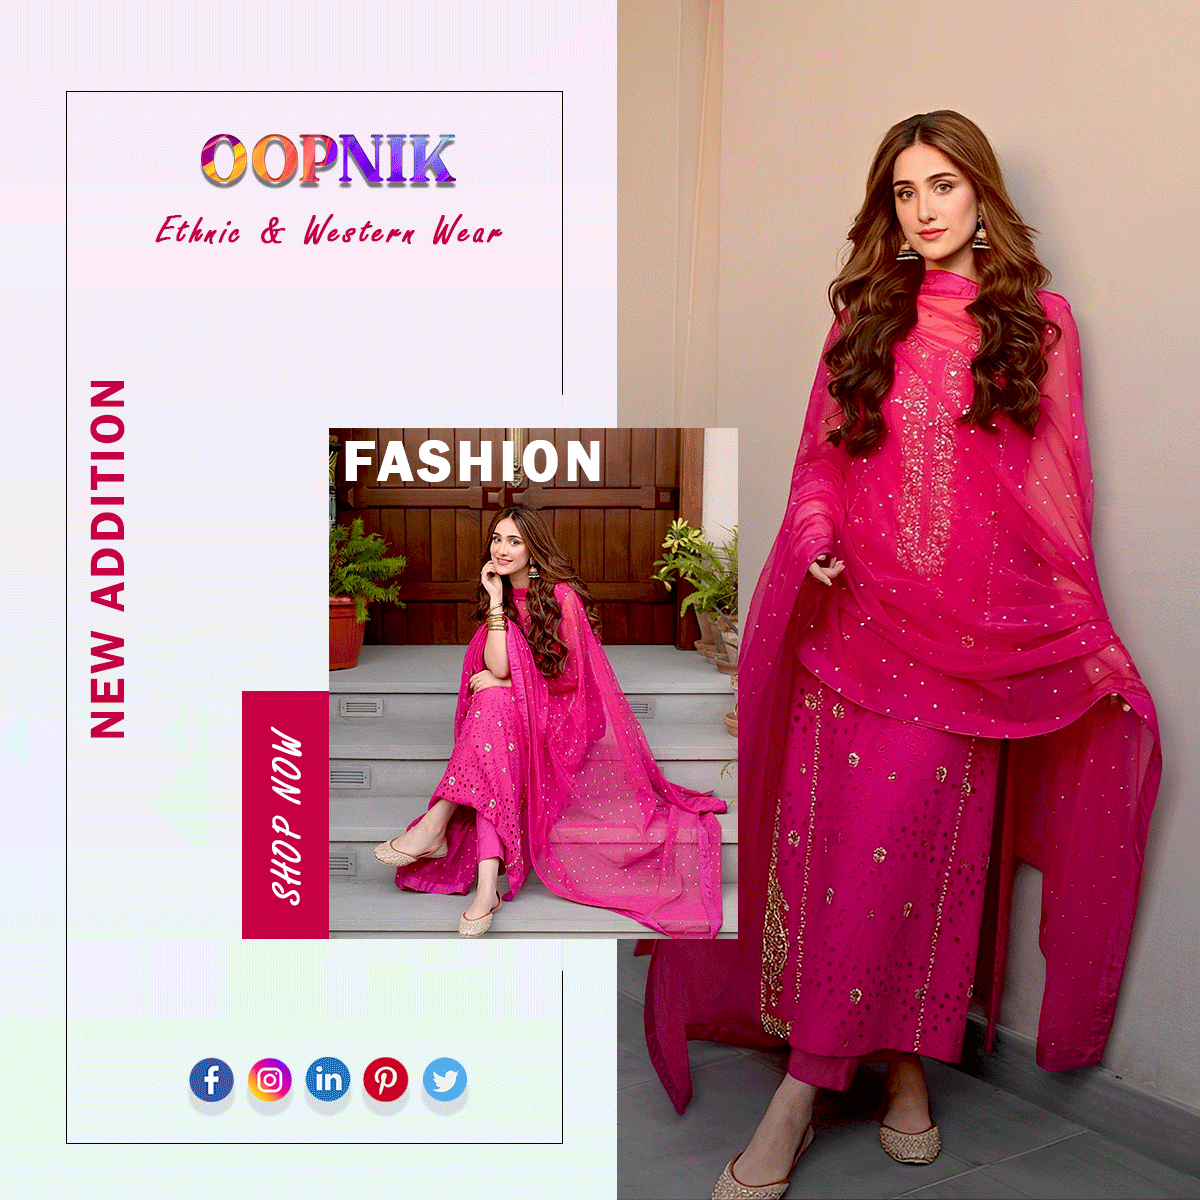 Bold and Beautiful in Pink: Embrace elegance and radiate confidence with this stunning kurta set.

#kurtaset #kurta #kurti #fashion #kurtasets #ethnicwear #onlineshopping #kurtis #indianwear #kurtastyle #kurtas #kurtacotton #style #dresses #kurtababy #kurtamodern #ootd #oopnik